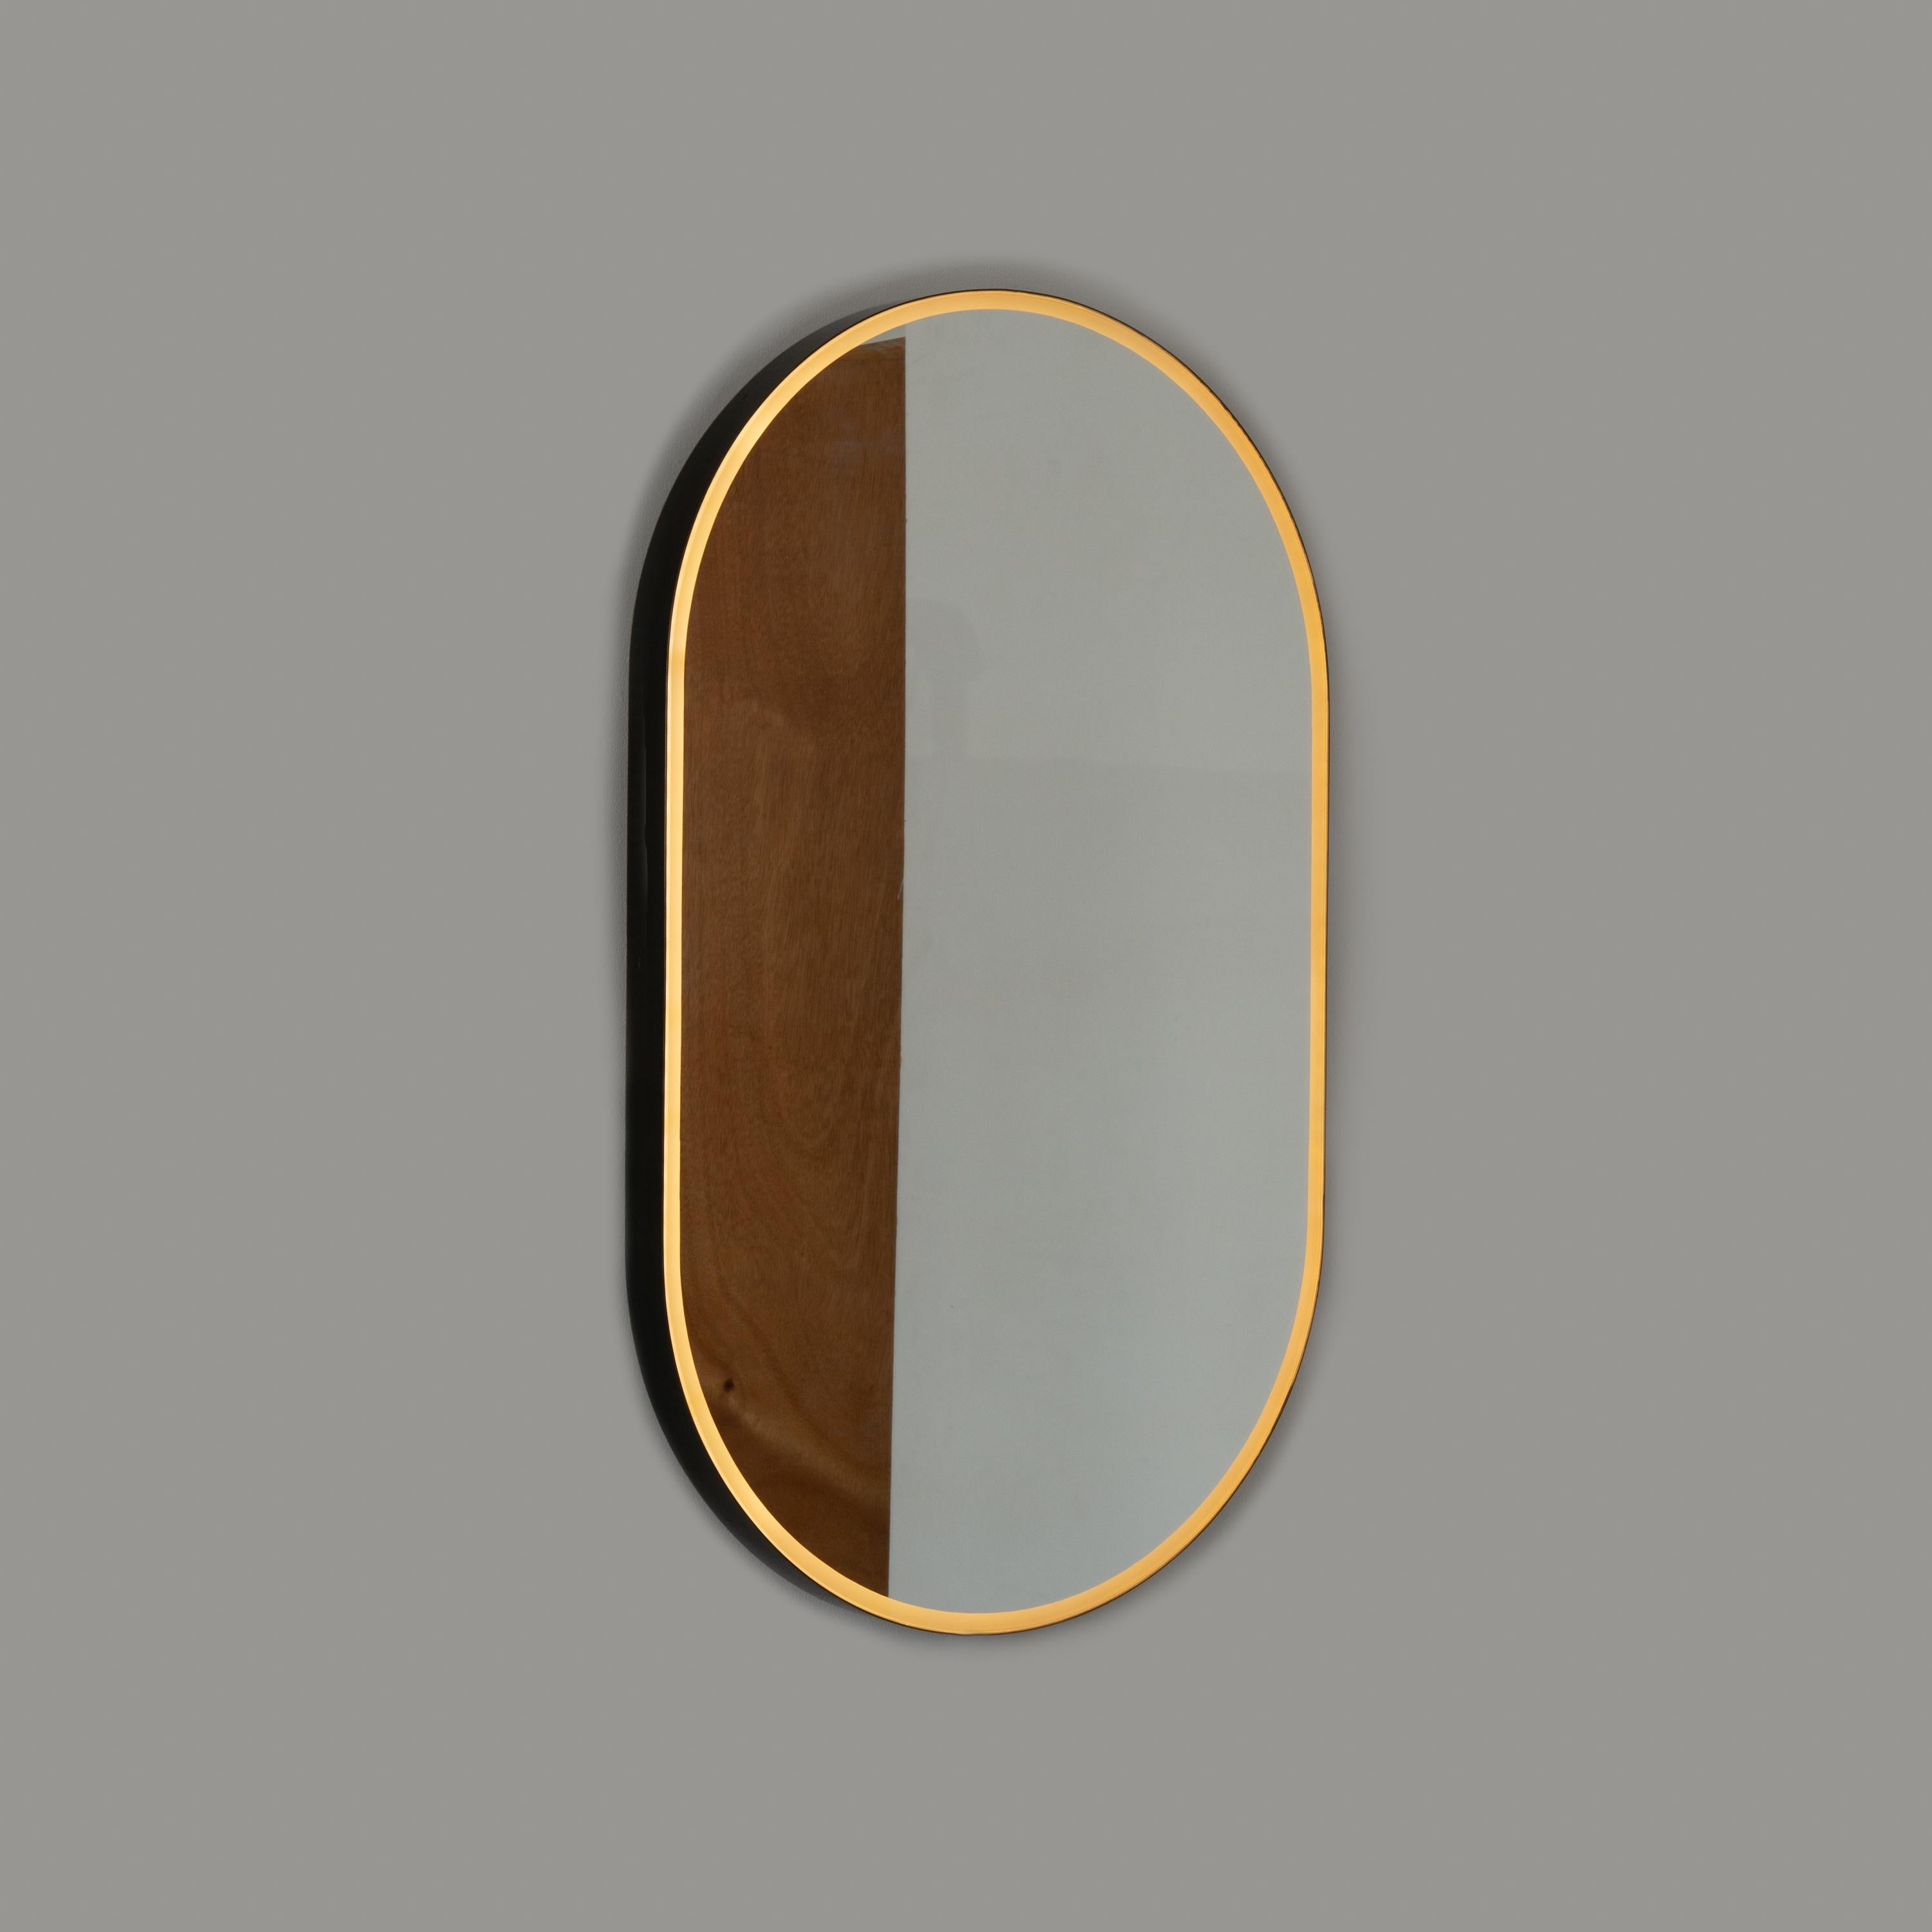 Capsula Illuminated Pill Shaped Customisable Mirror, Bronze Patina Frame, Large For Sale 3